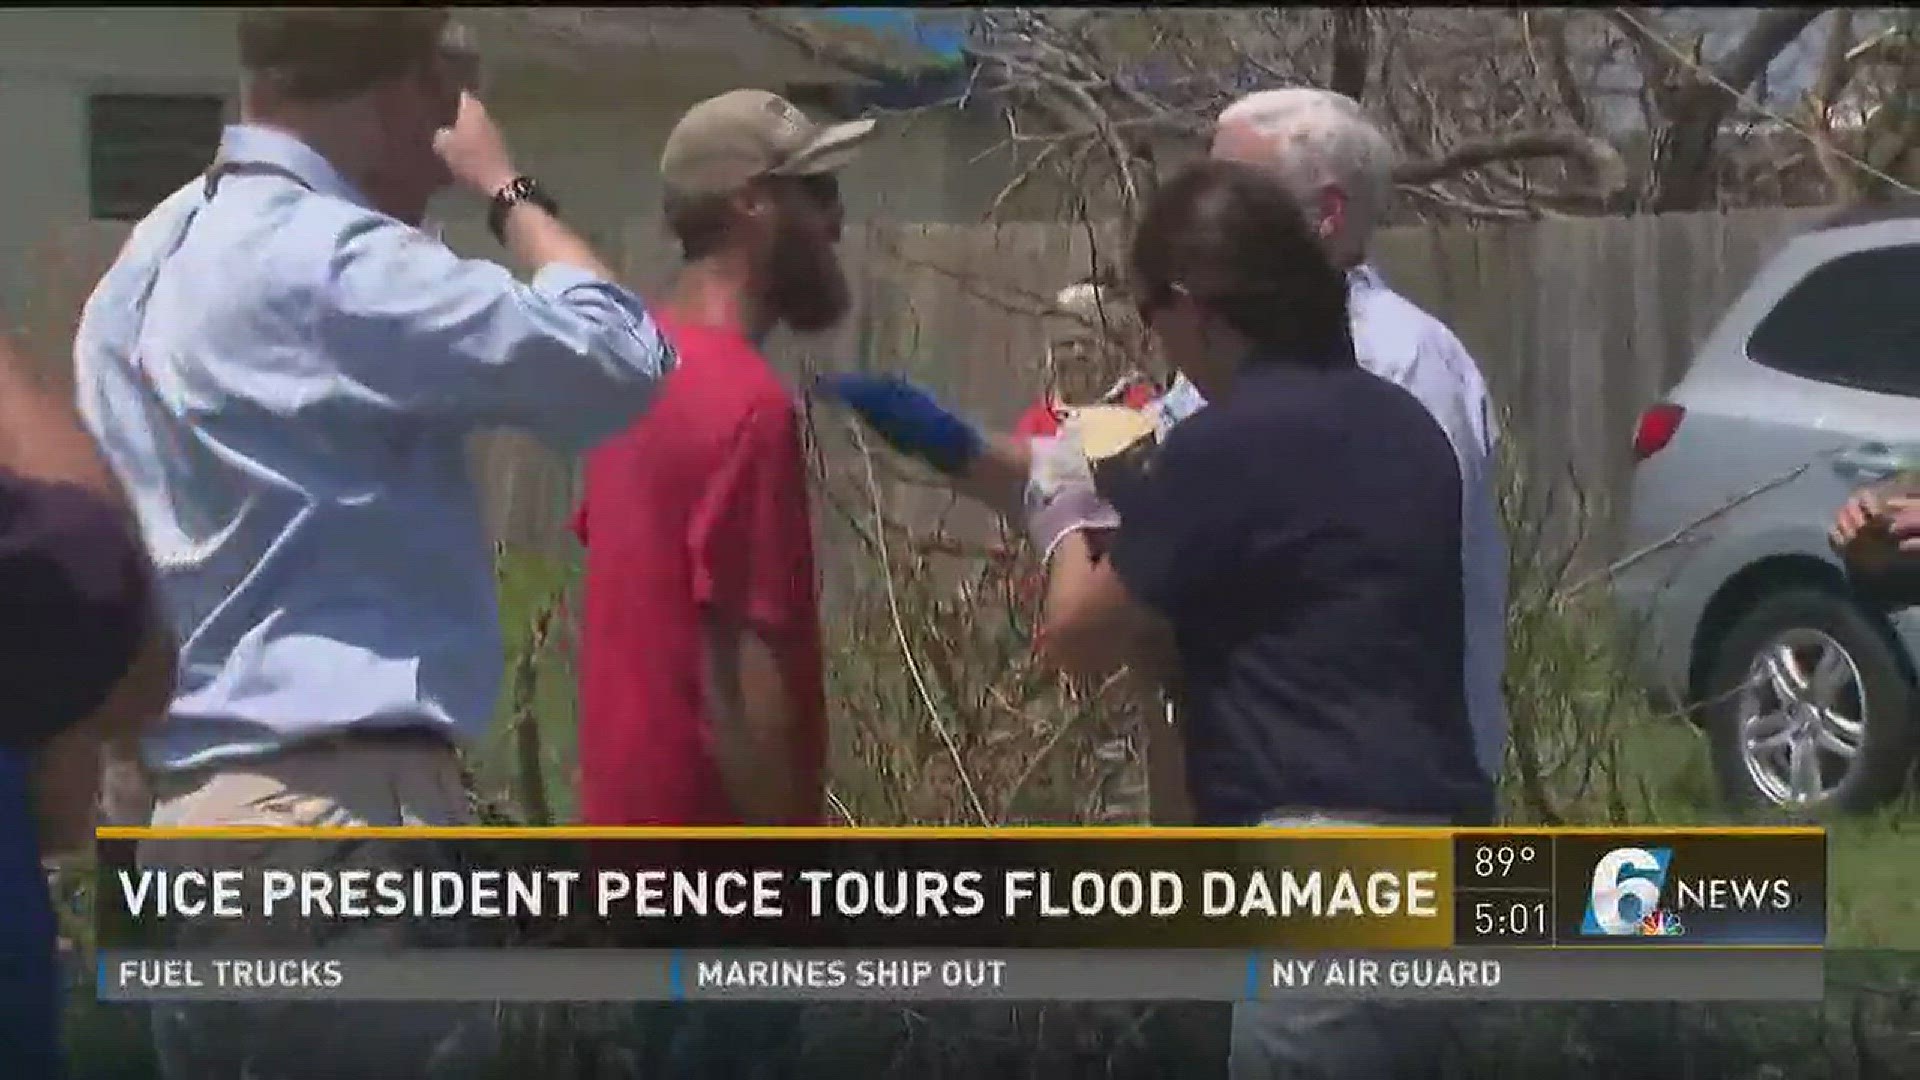 Vice President Pence tours flood damage